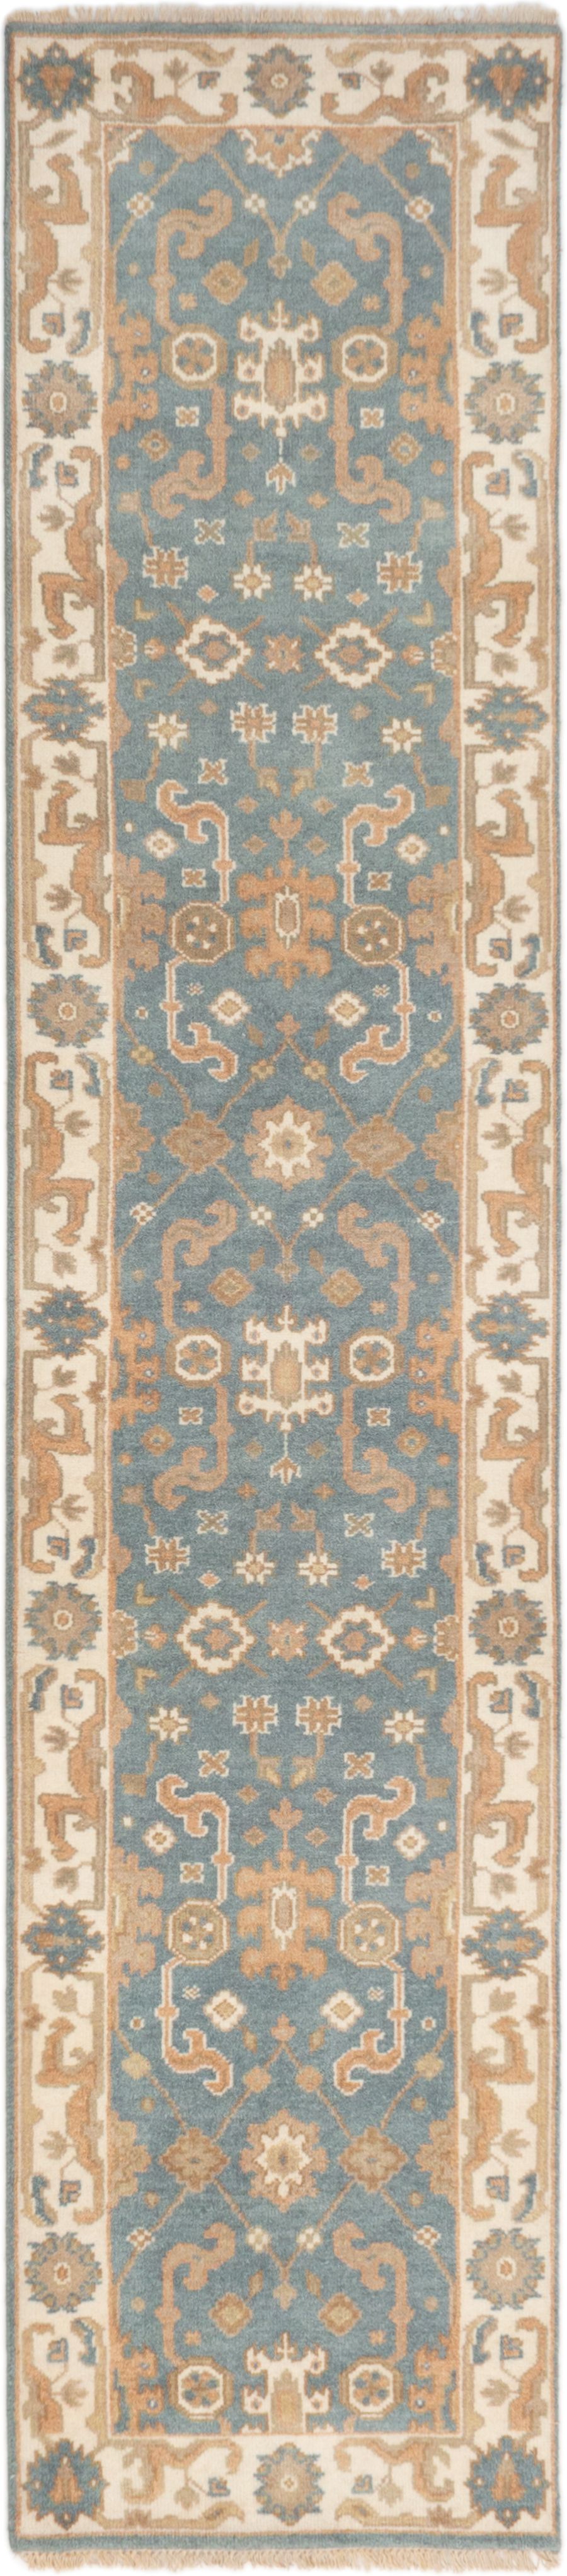 Hand-knotted Royal Ushak Turquoise Wool Rug 2'7" x 11'11" Size: 2'7" x 11'11"  